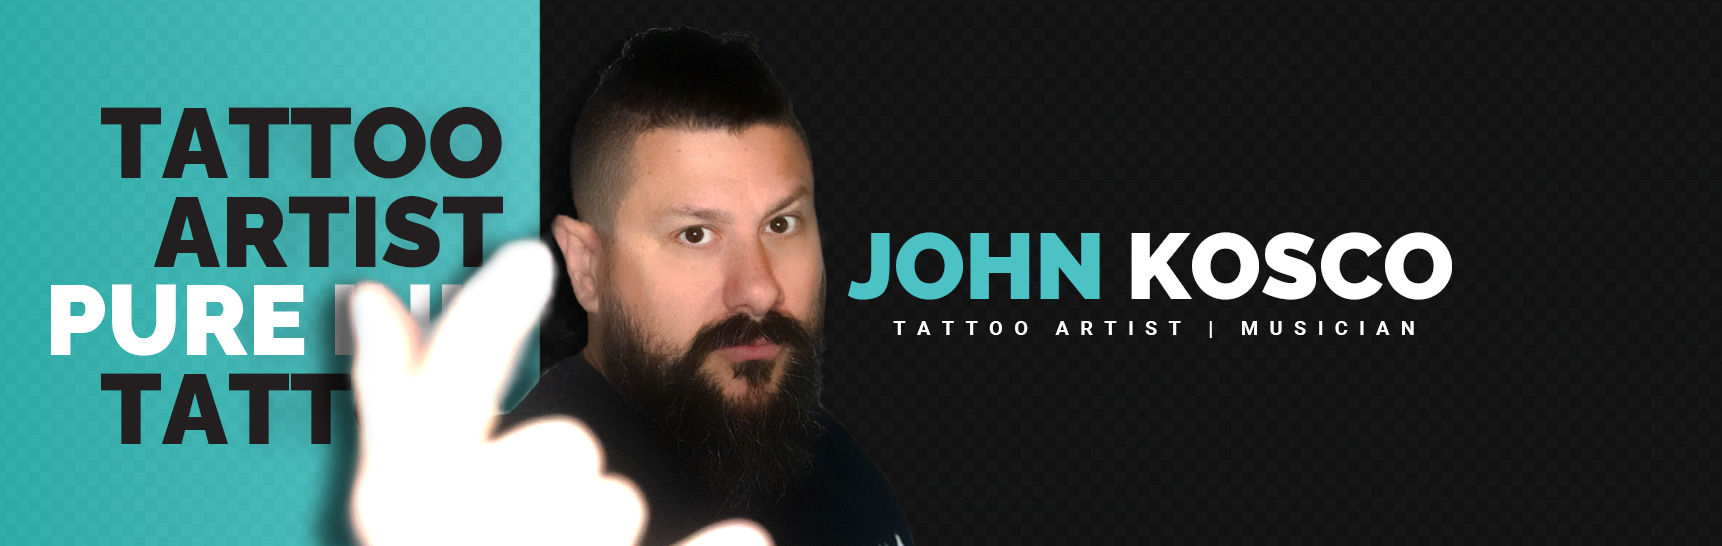 John Kosco - Tattoo Artist - Musician - Pure Ink Tattoo Studio NJ